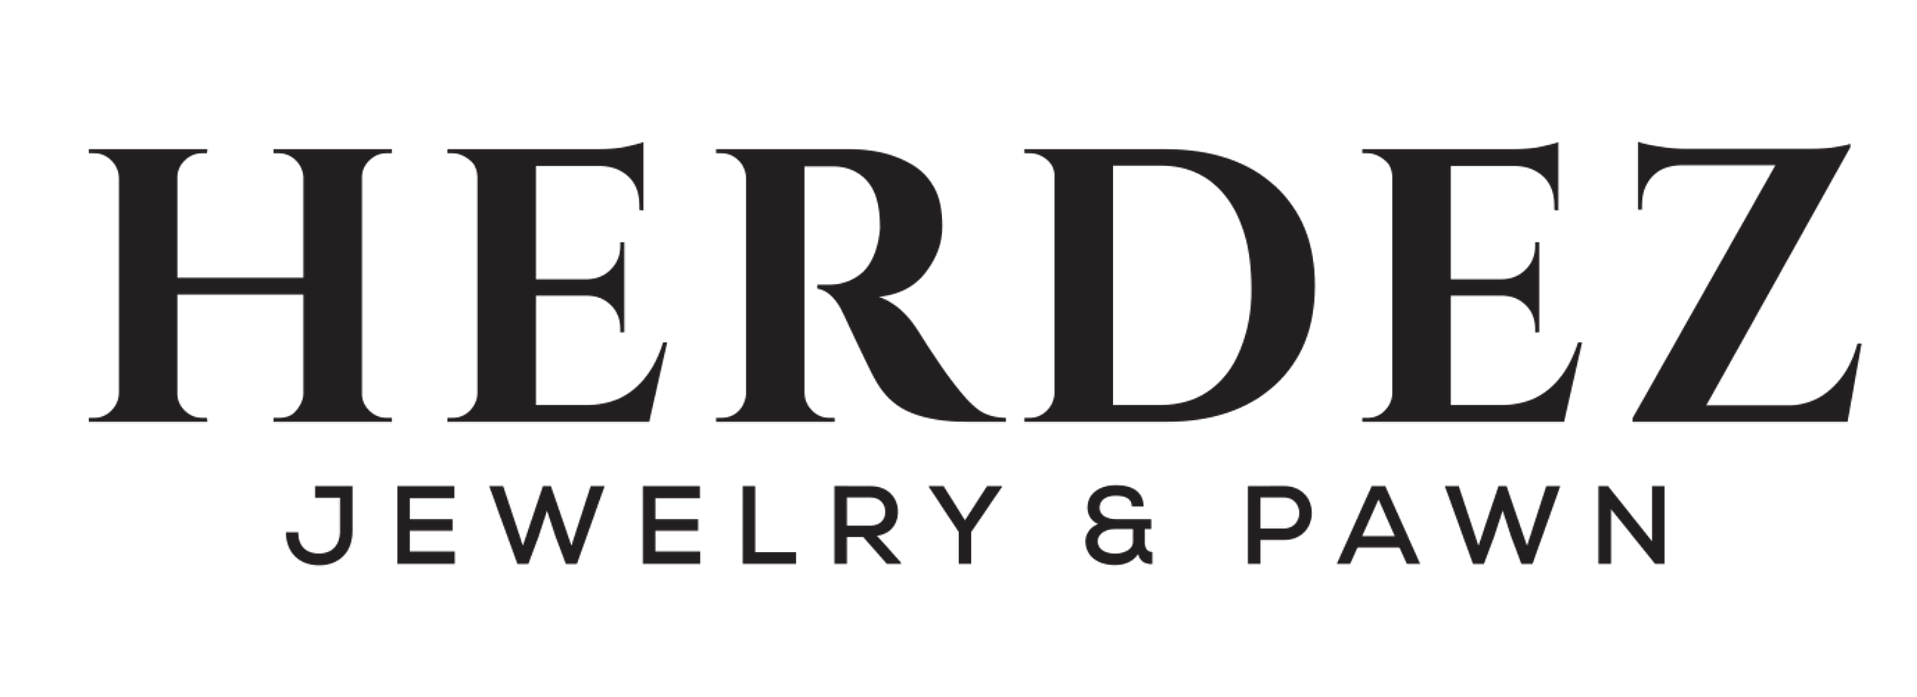 Herdez Logo Simplified